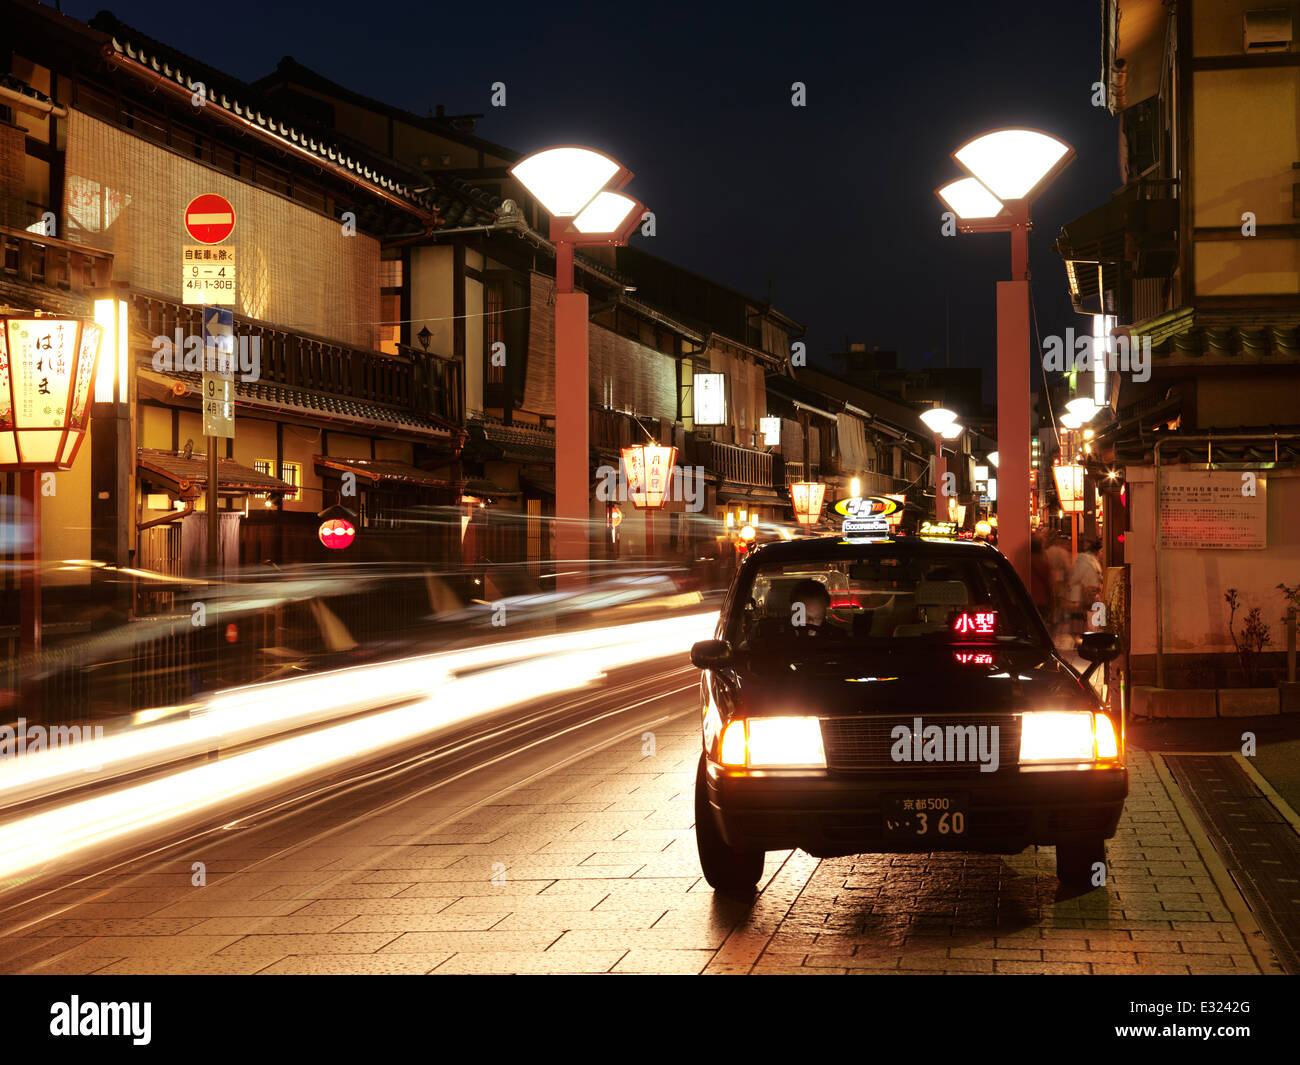 Taxi cab at Hanami-koji dori street at night, Hanamikoji geisha district, Gion, Kyoto, Japan 2014 Stock Photo